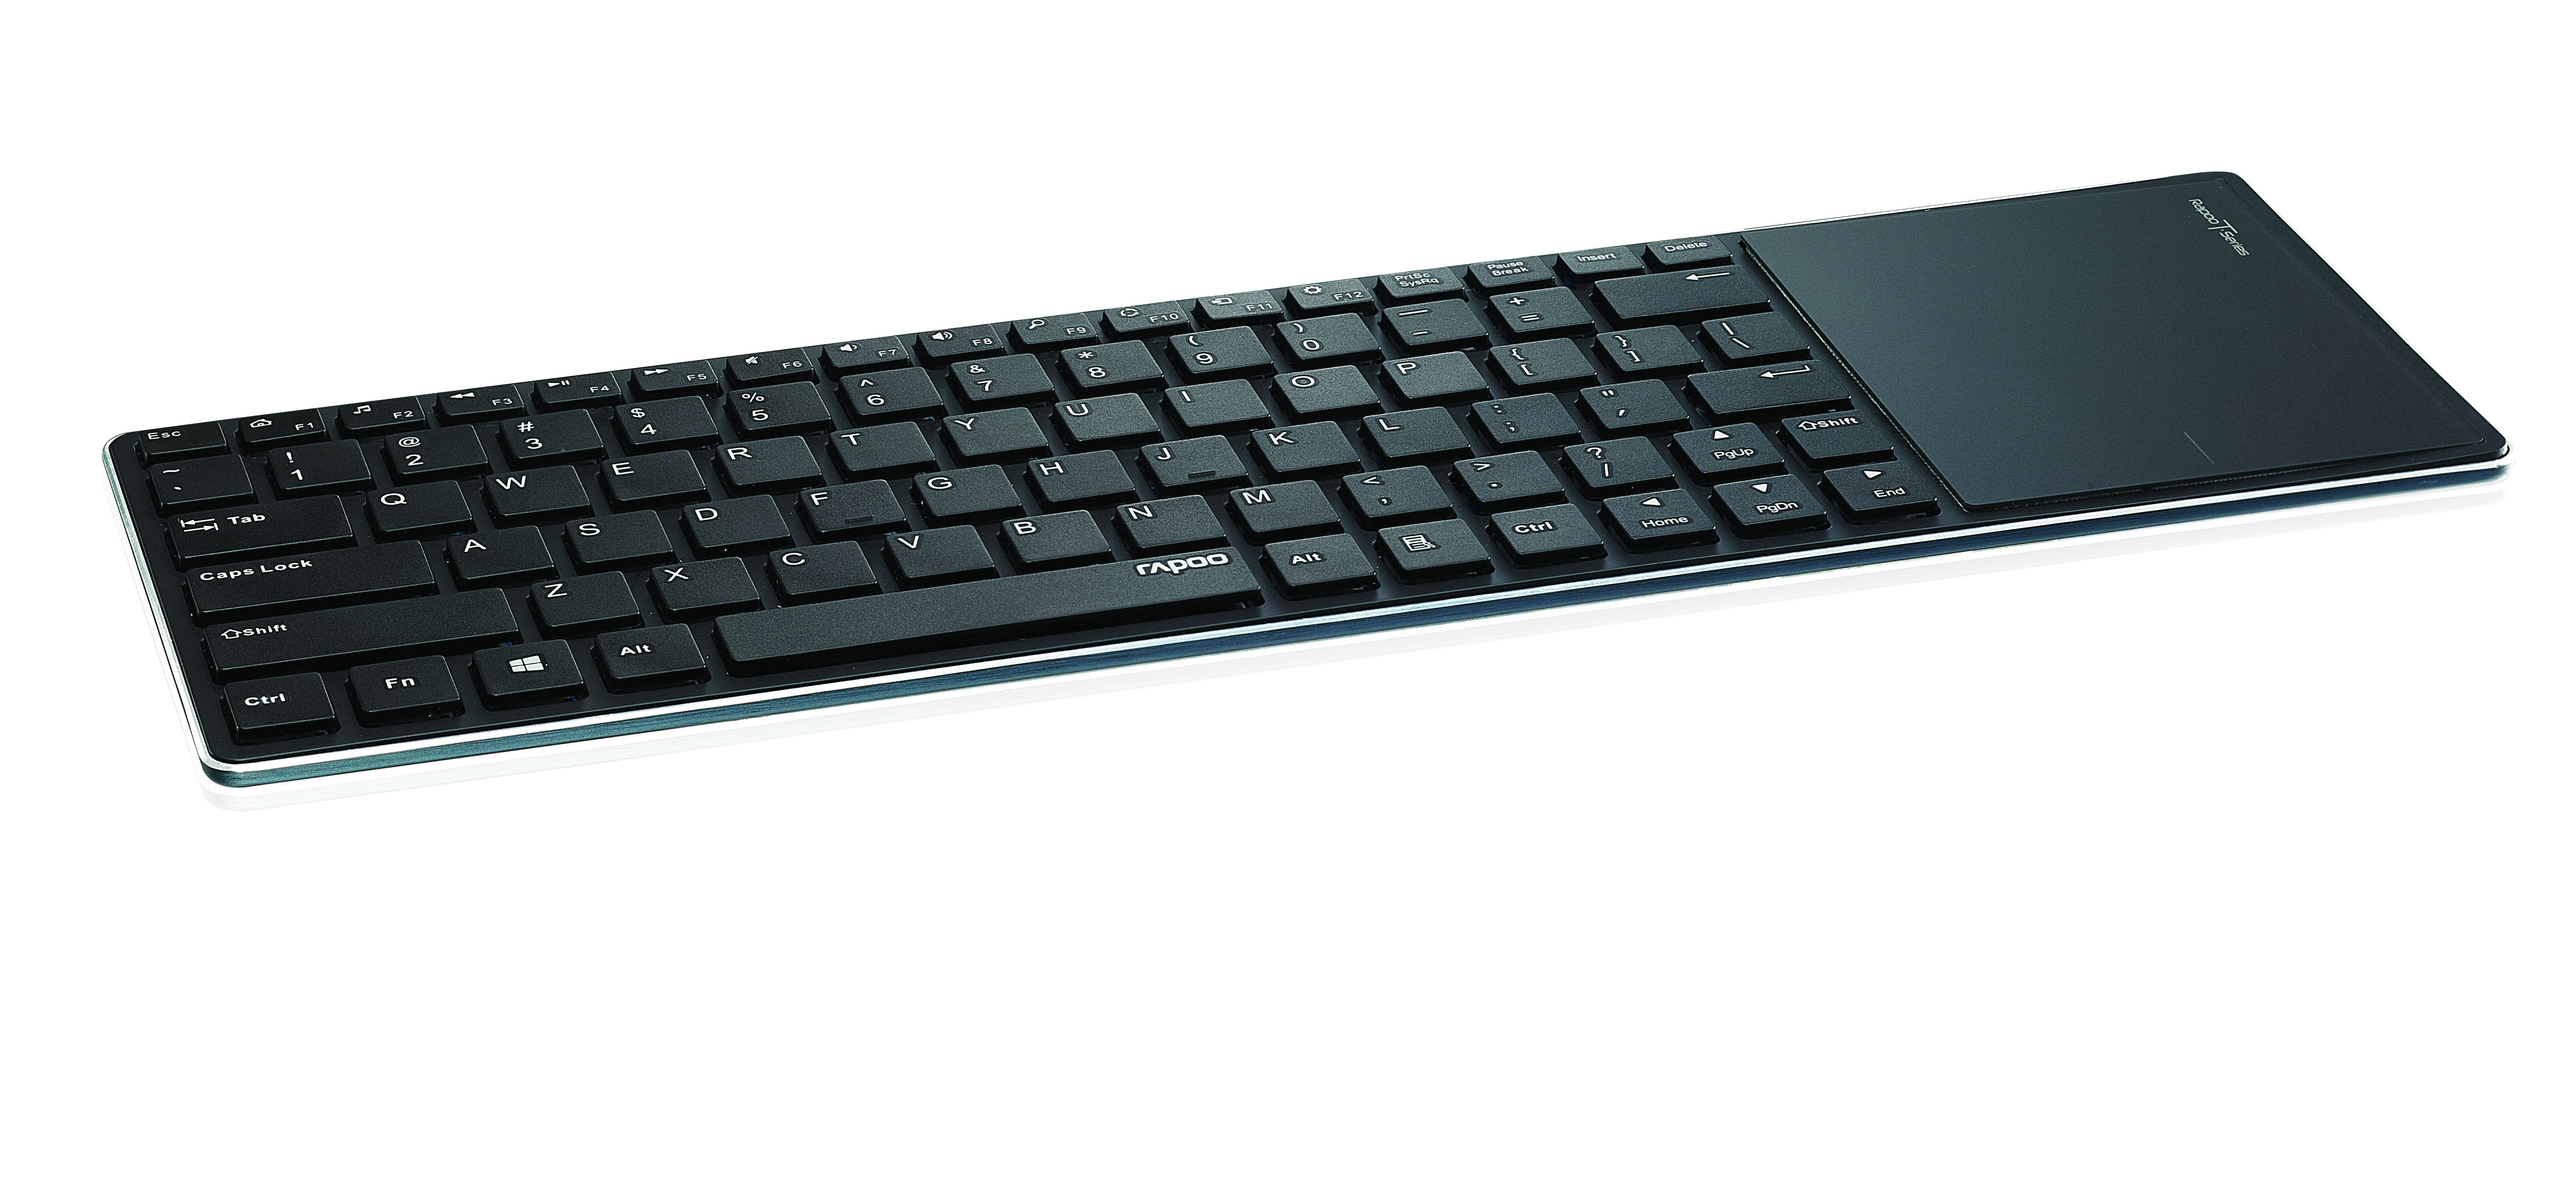 Image of E2800 Media Keyboard